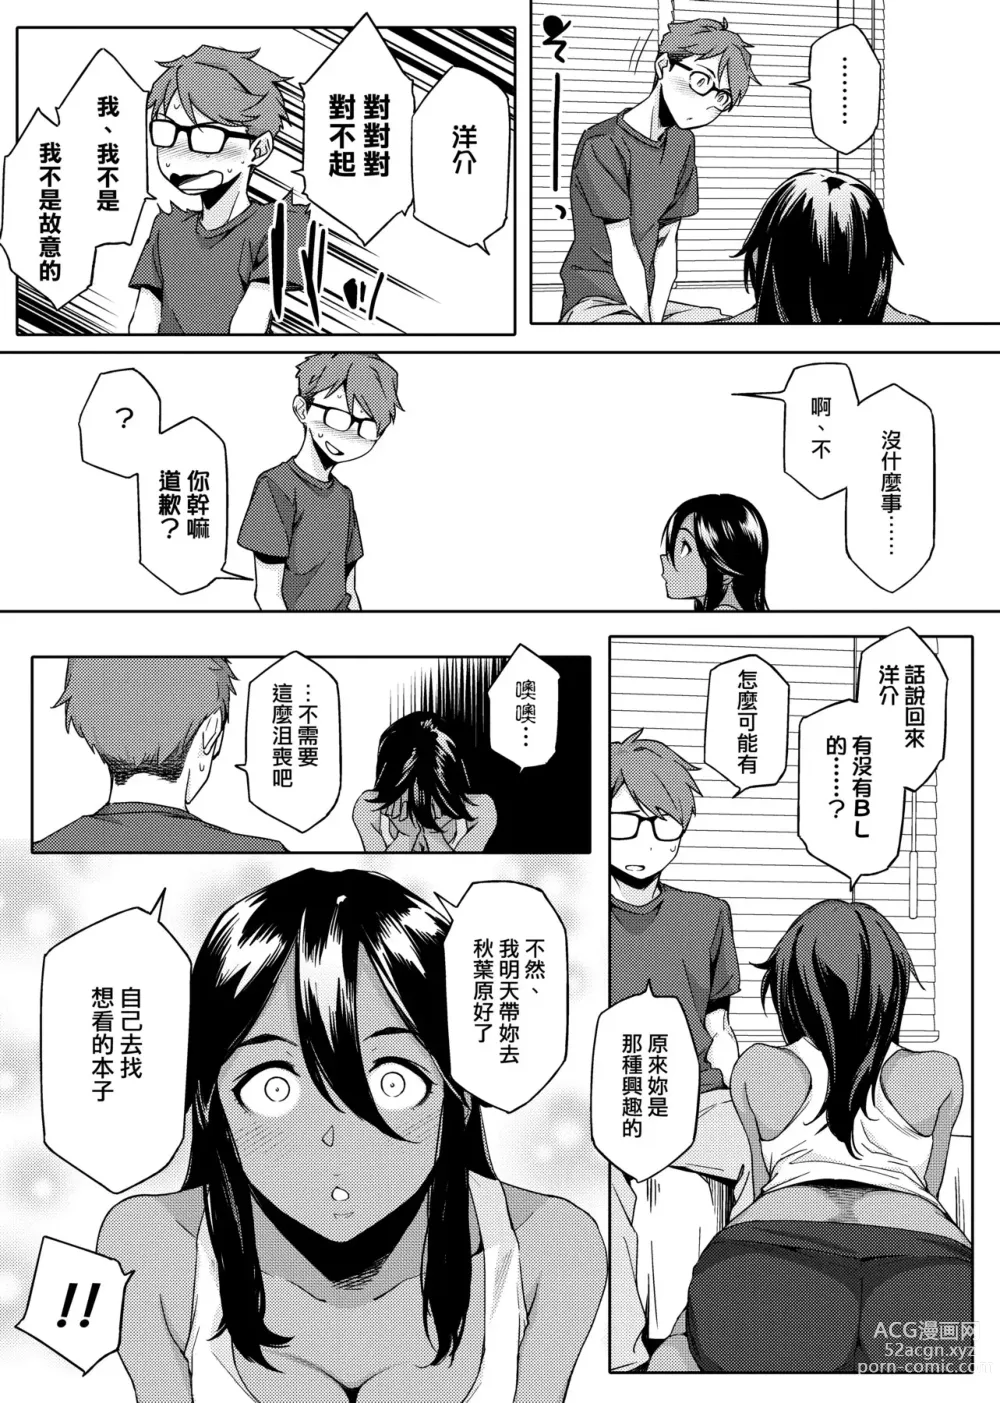 Page 14 of manga Natsu Koi Ota Girl - What Brings You to Japan?